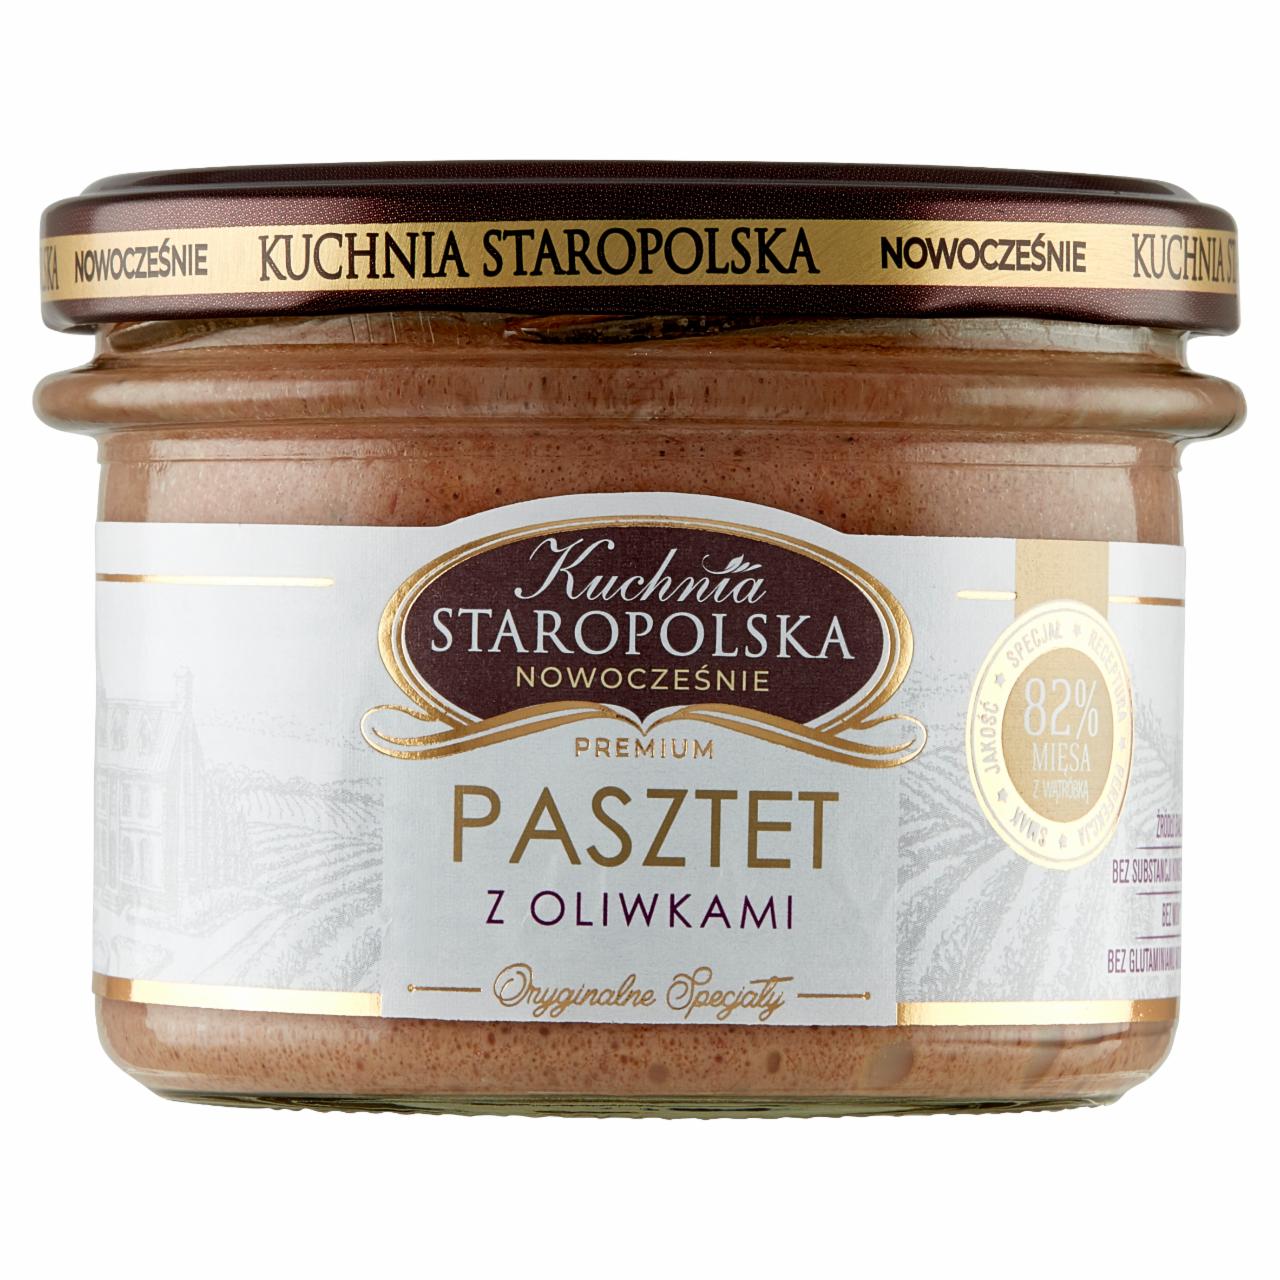 Zdjęcia - Kuchnia Staropolska Premium Pasztet z oliwkami 160 g